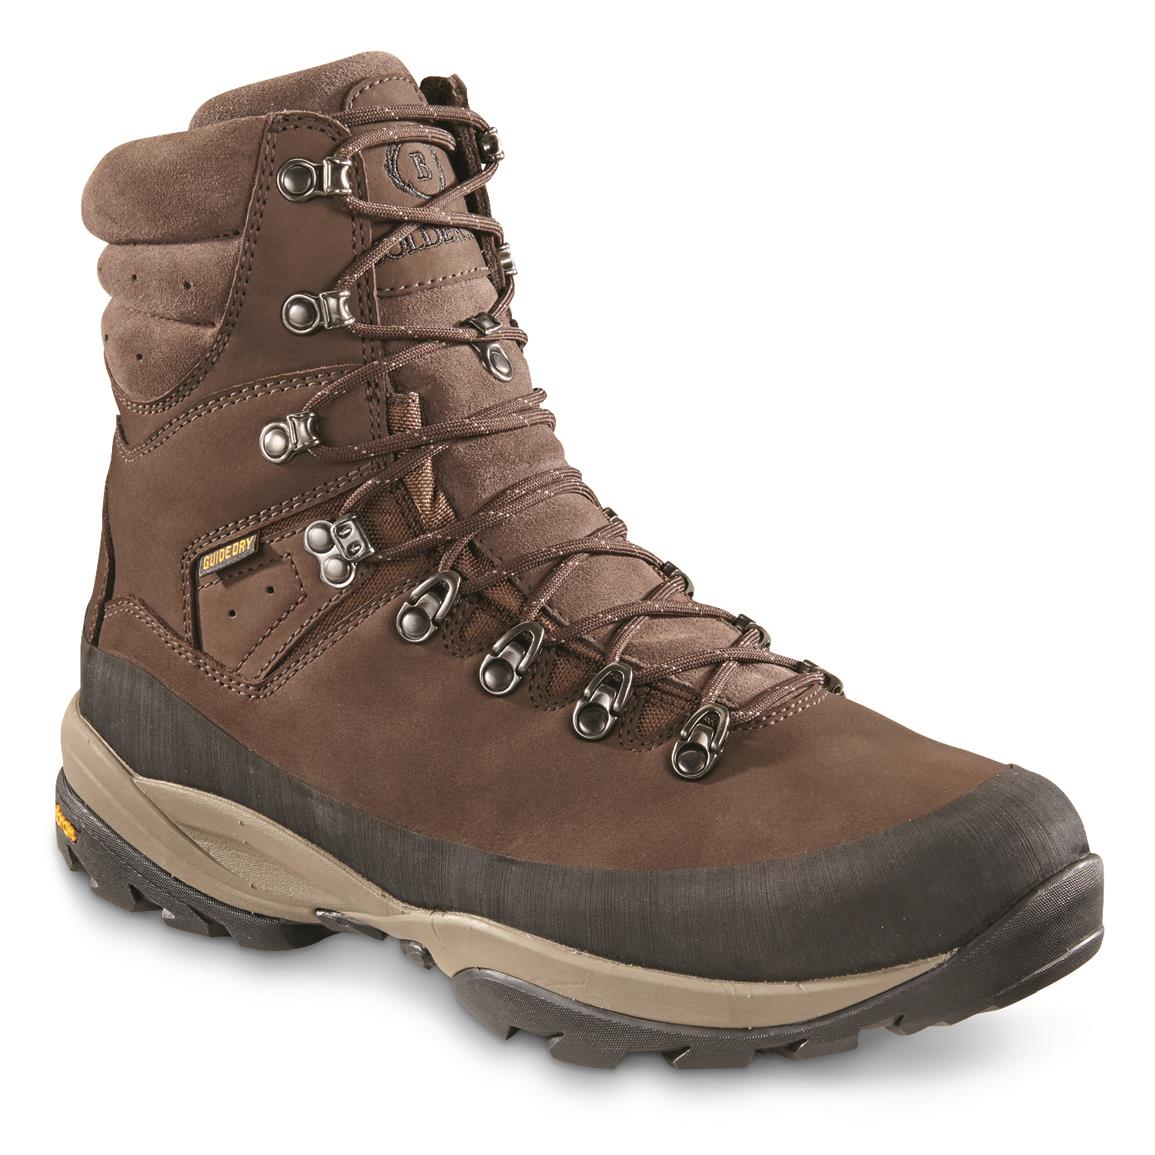 Bolderton Men's Ridge 8" Waterproof Insulated Hunting Boots, 400 Gram, Dark Brown